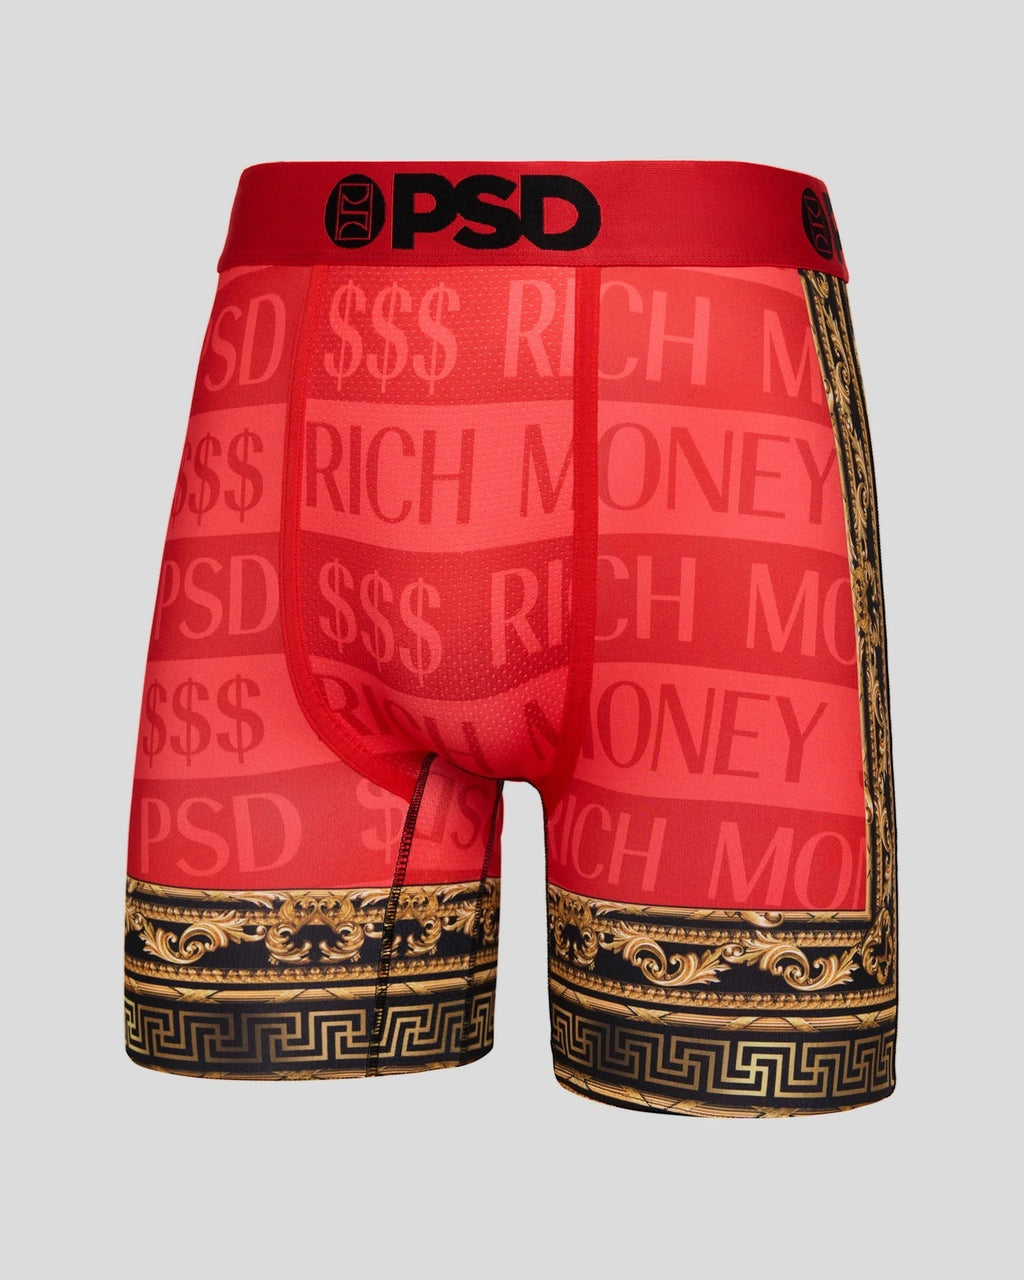 Psd Boxer Briefs "Rich Money"